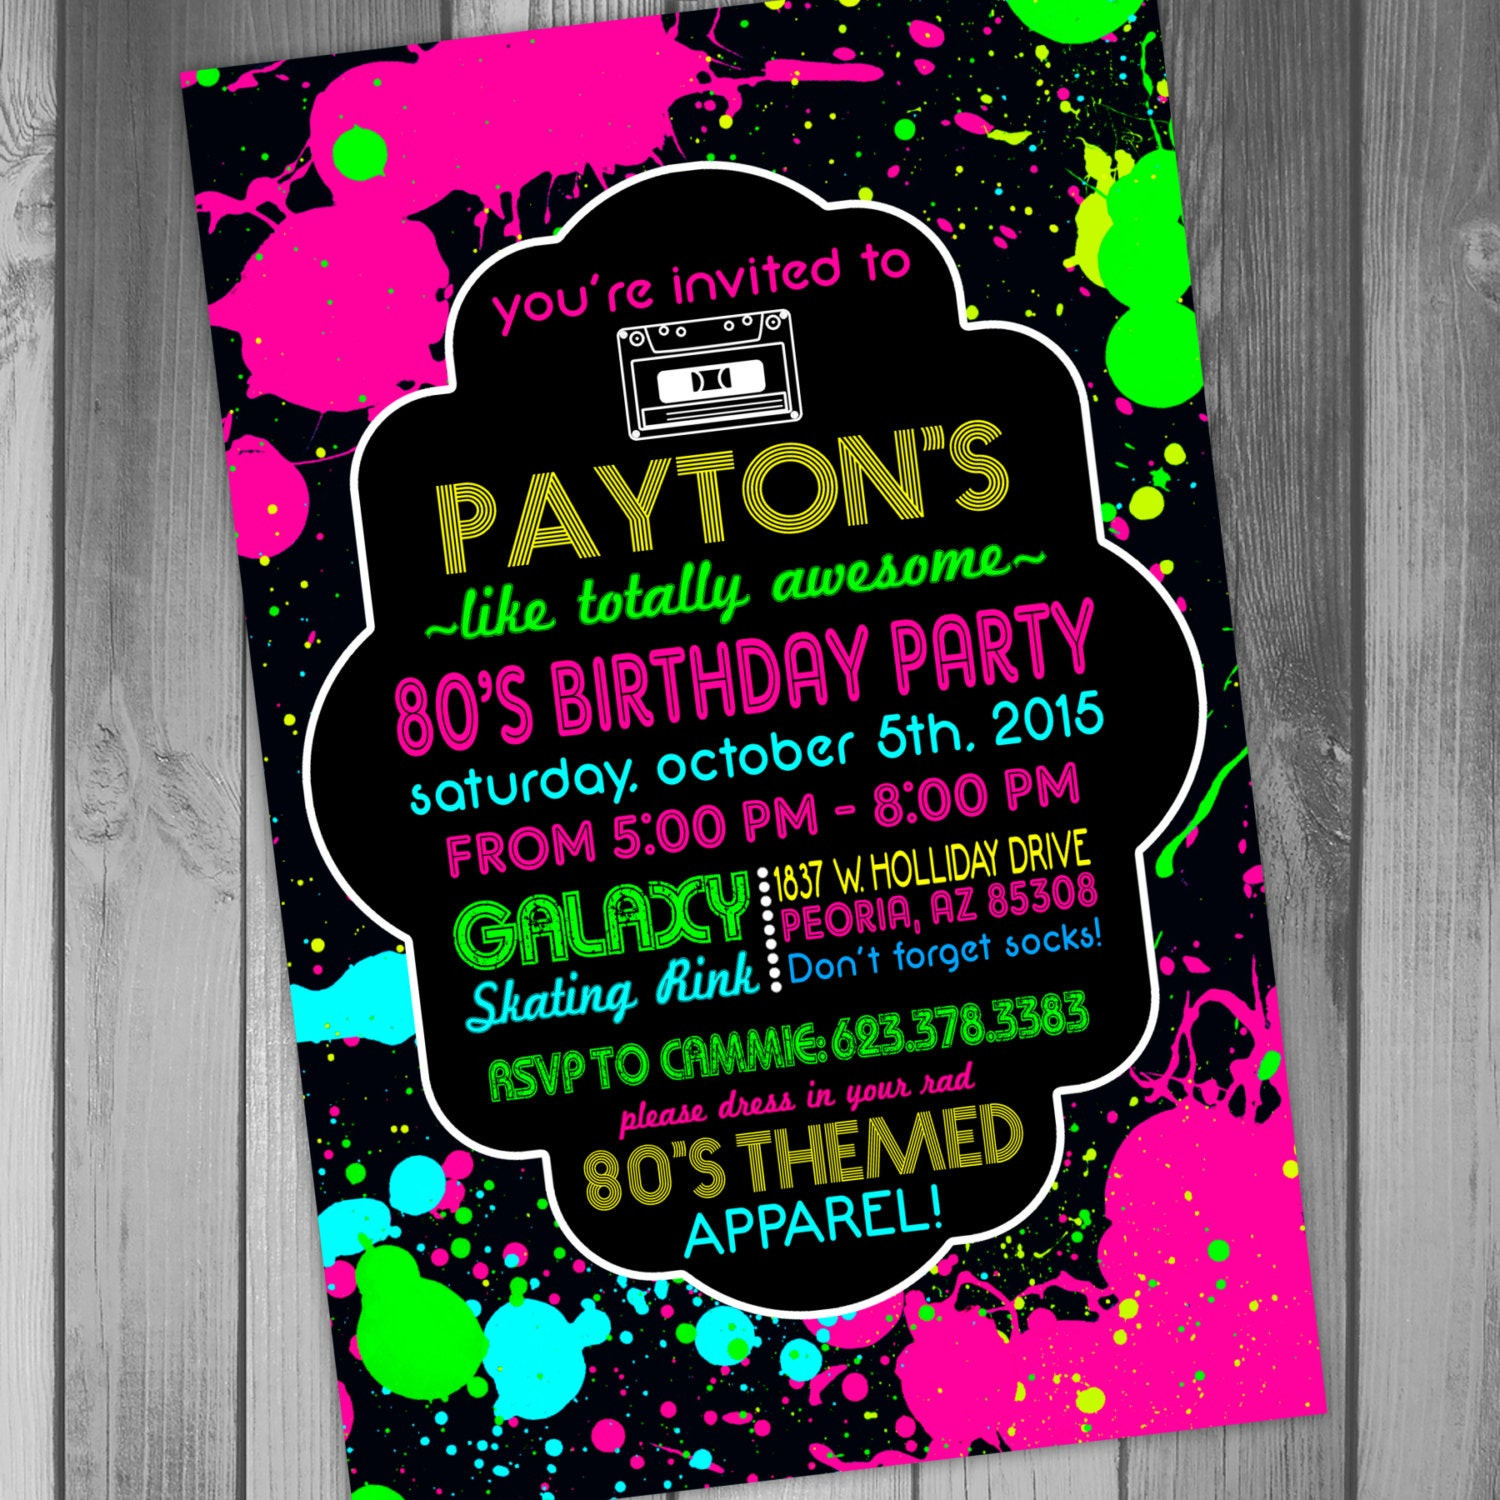 80s Birthday Party Invitations
 Birthday Party Invite 80s Birthday Party 80s Party by